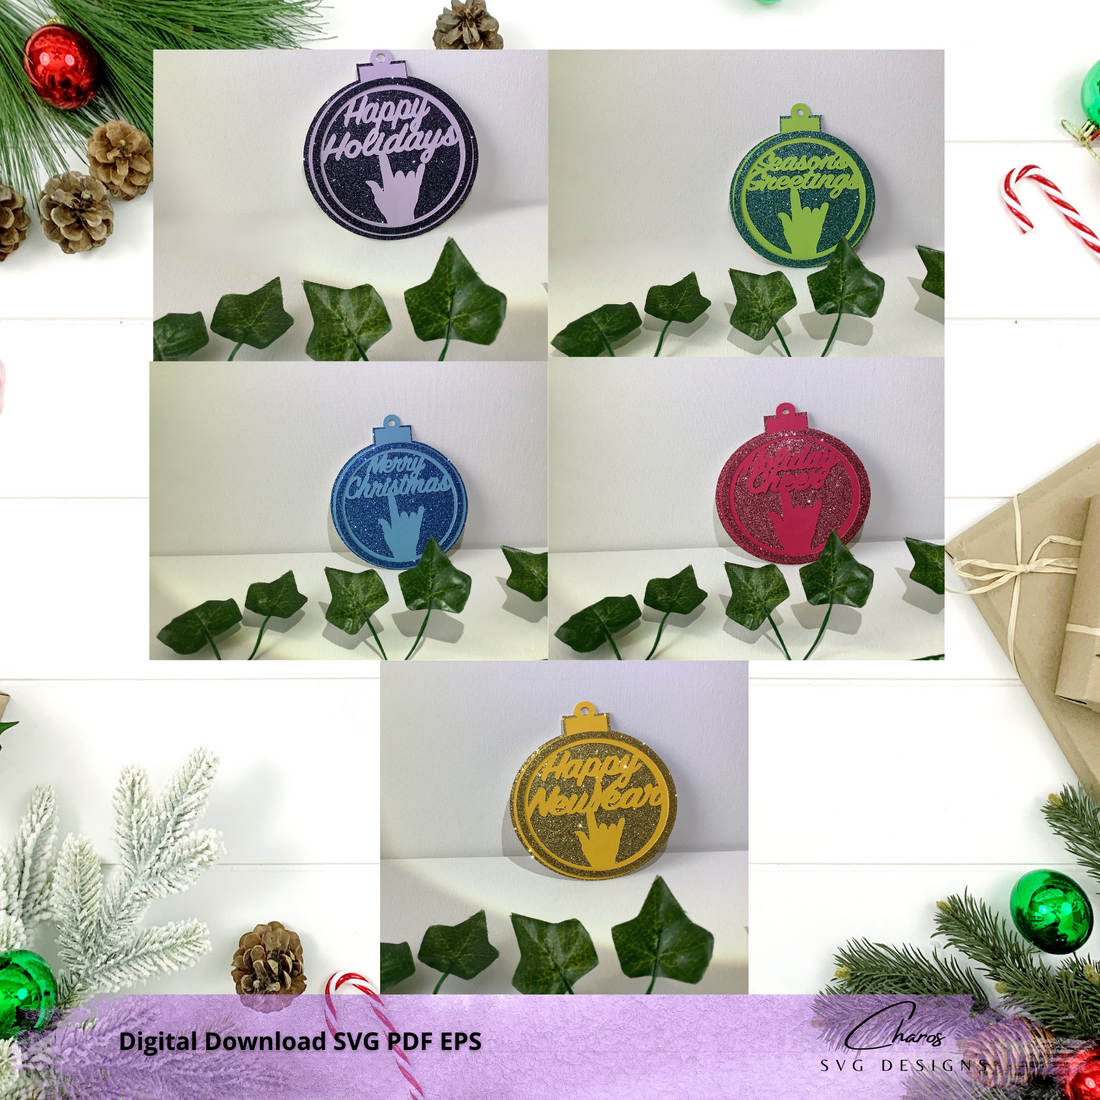 SVG: Three Layer I Love You in ASL Holiday Ornaments SVG Bundle | Cricut Cut File |